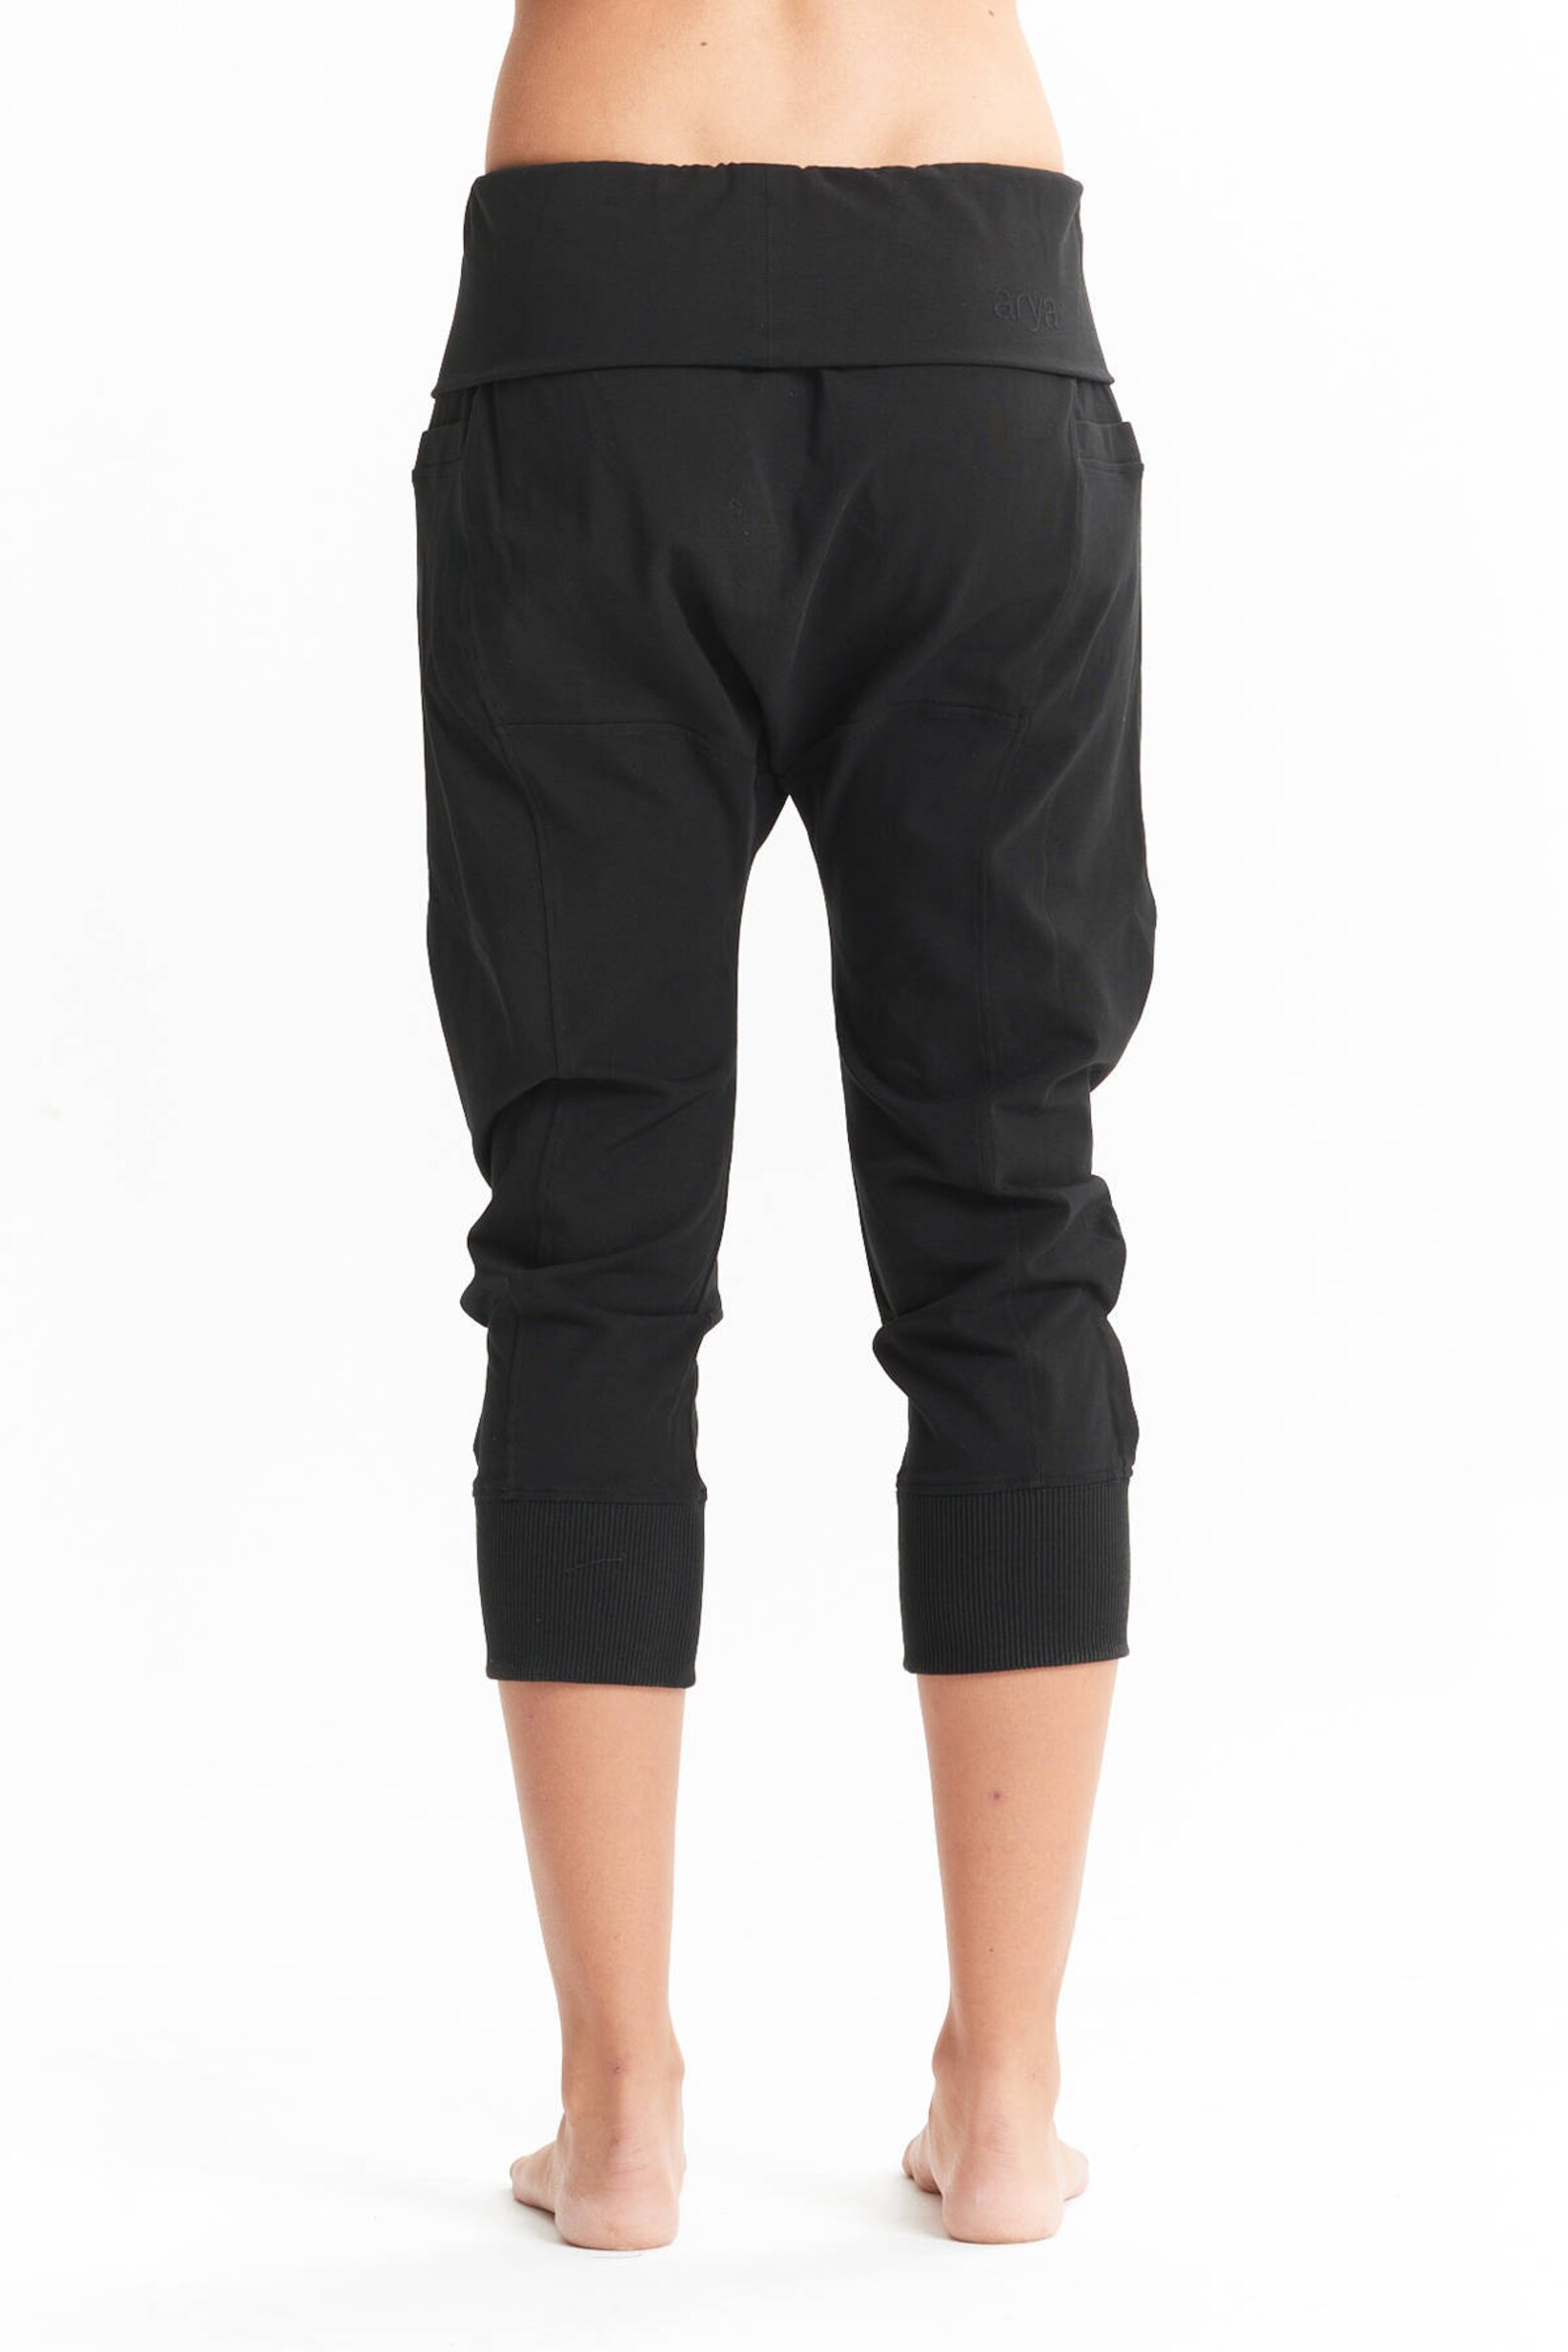 Arya Yoga Pants/ Black Drop Crotch Pants/ Yoga Clothes/ - Etsy